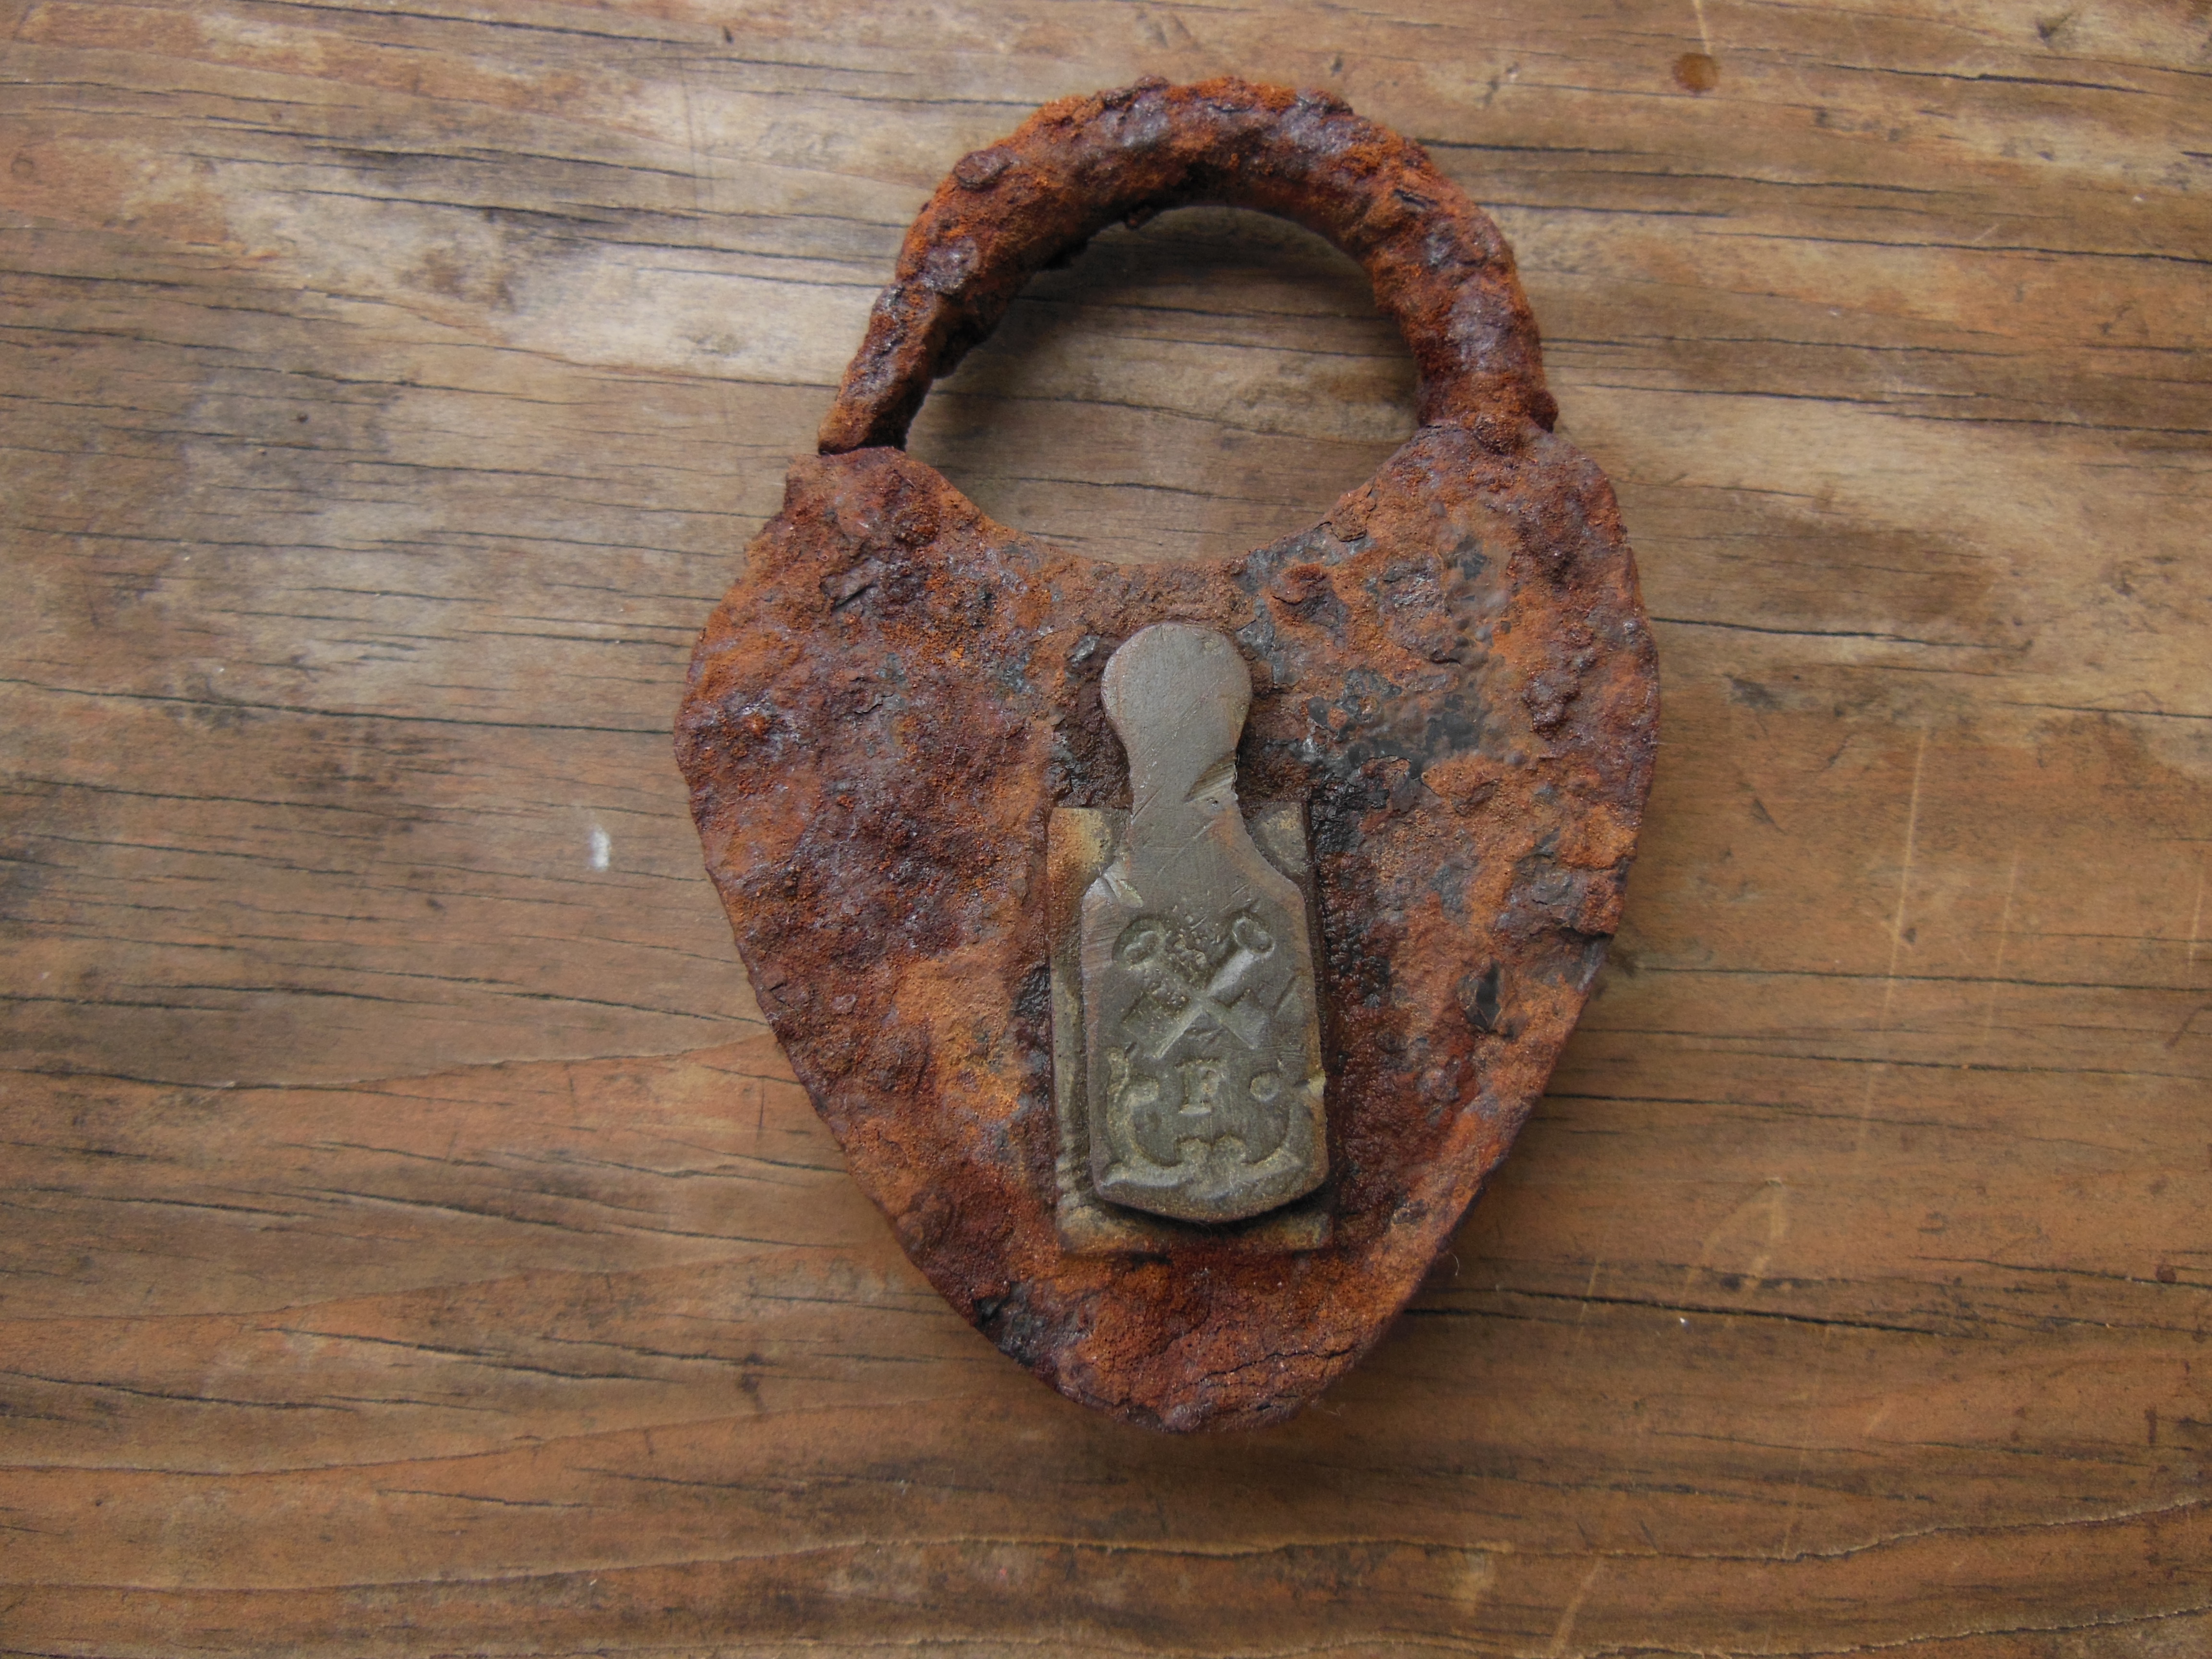 Antique padlock? Plz identify